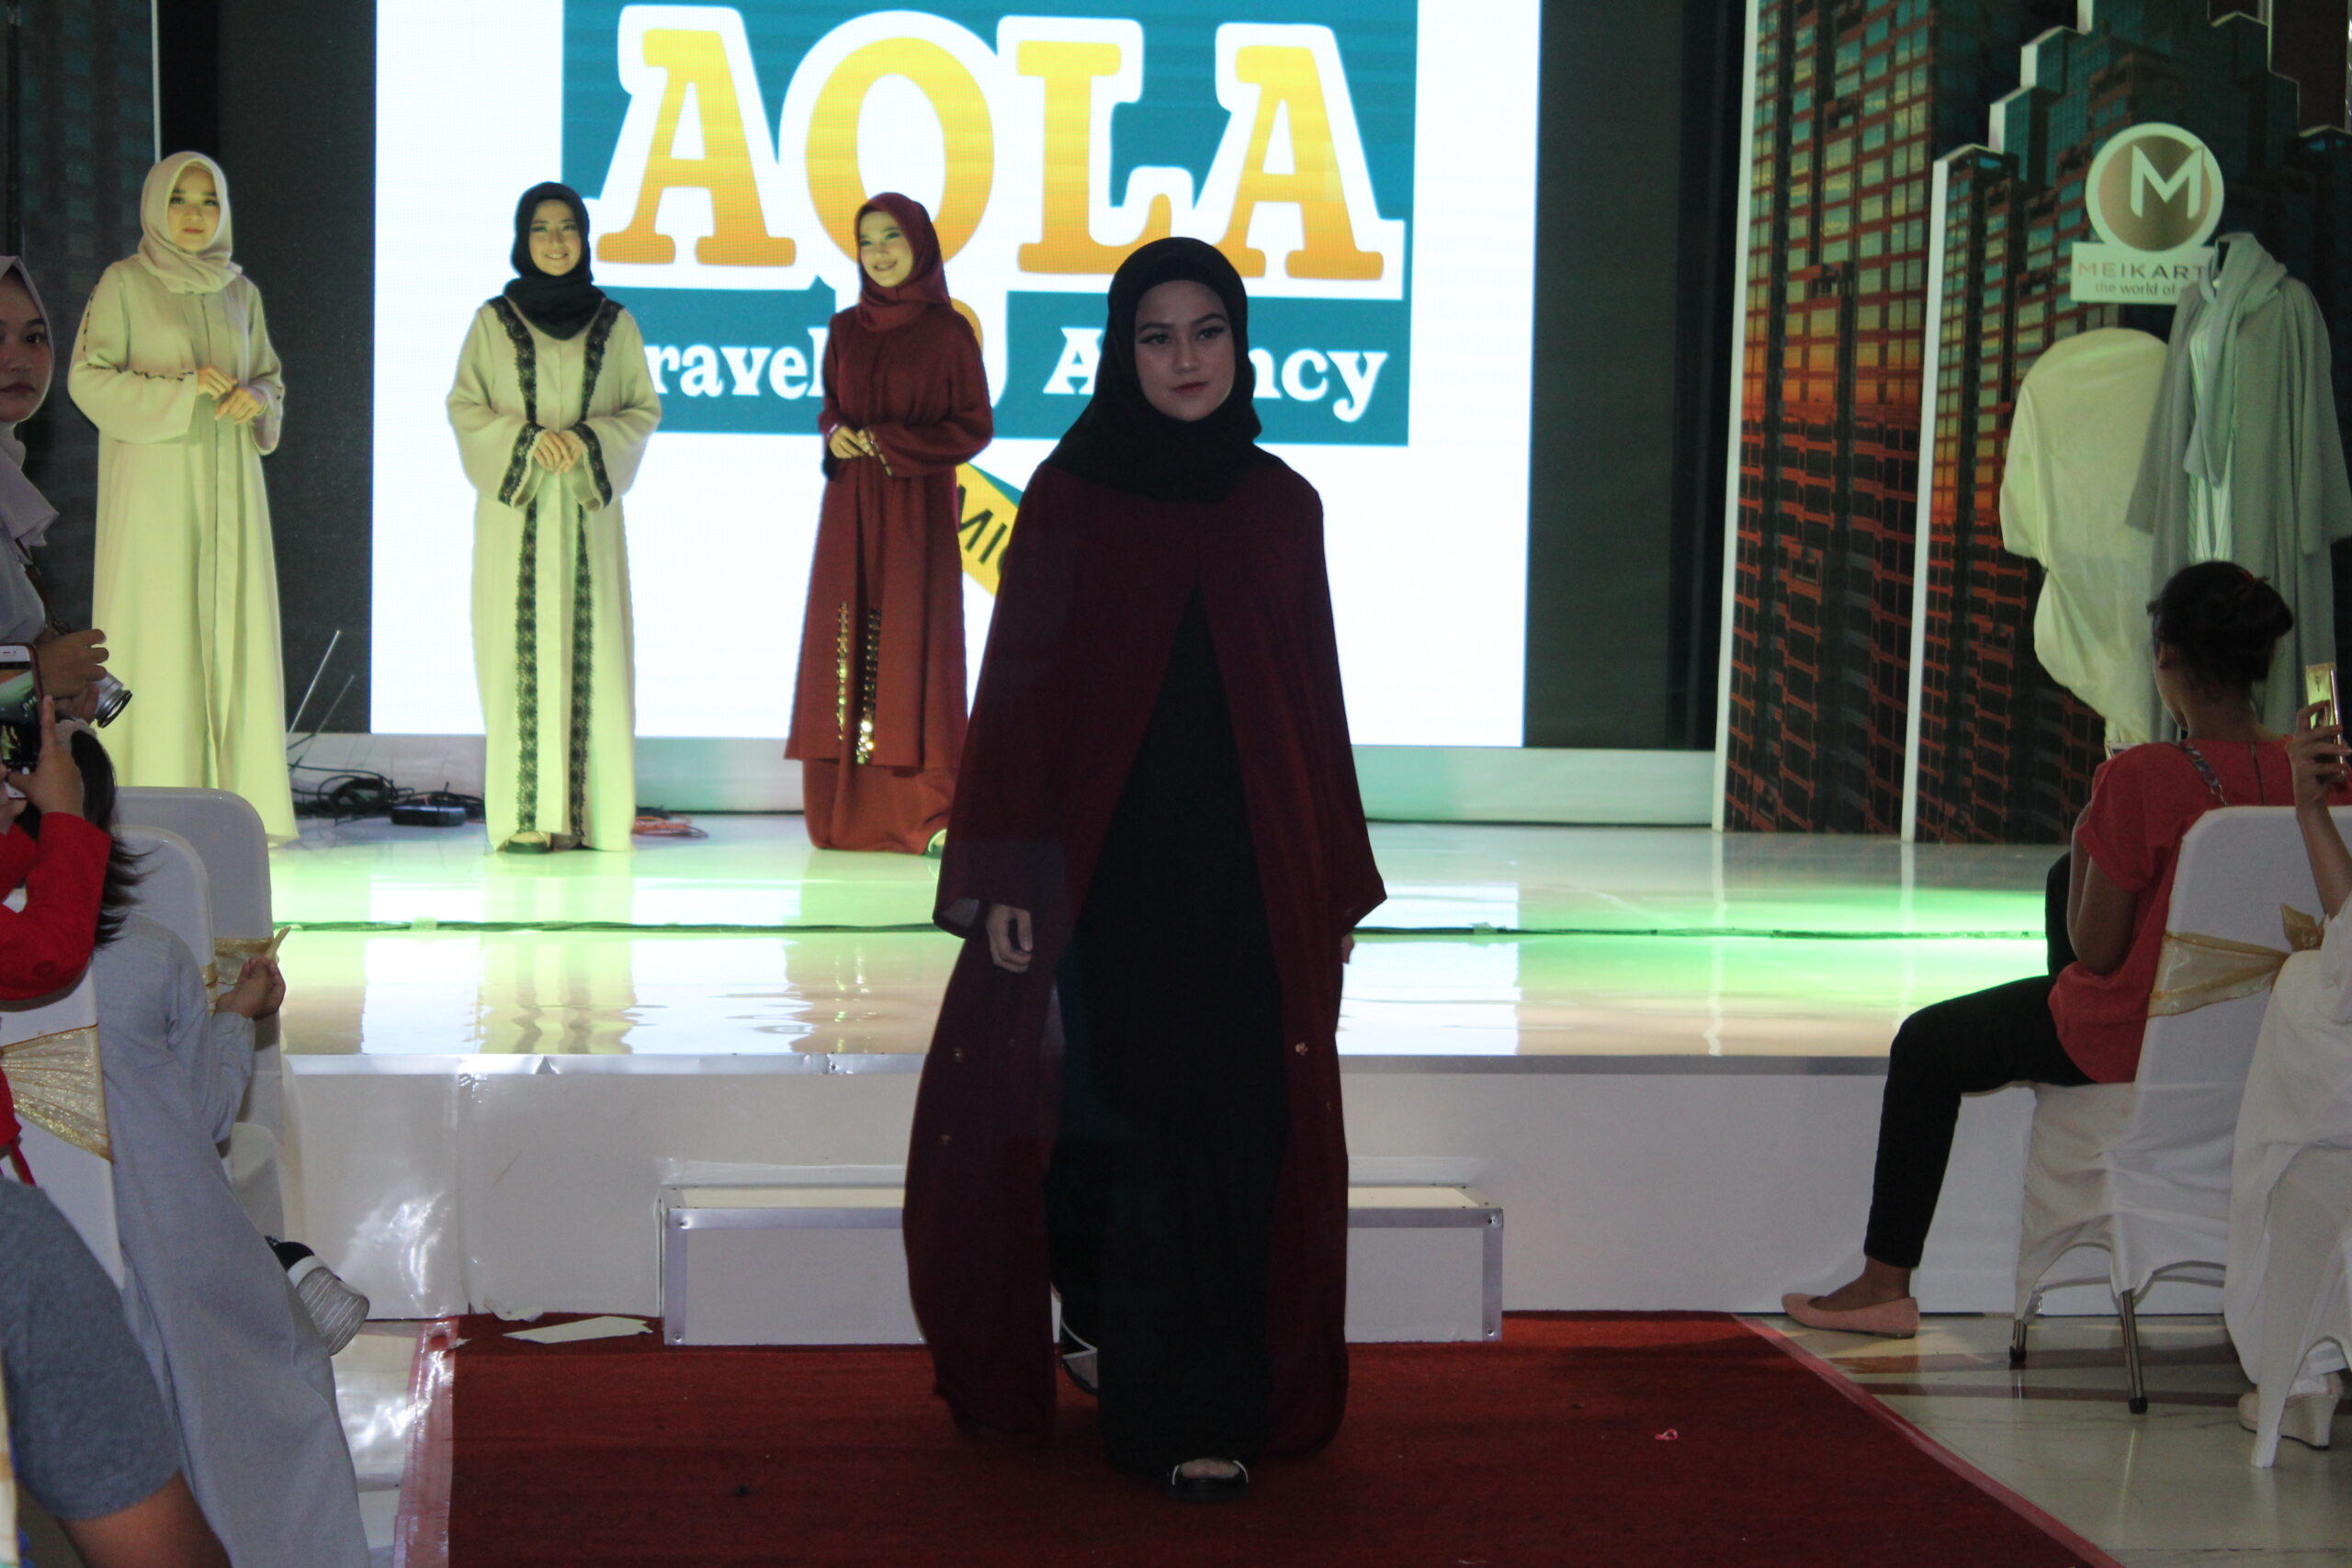 AQLA Tour and Travel